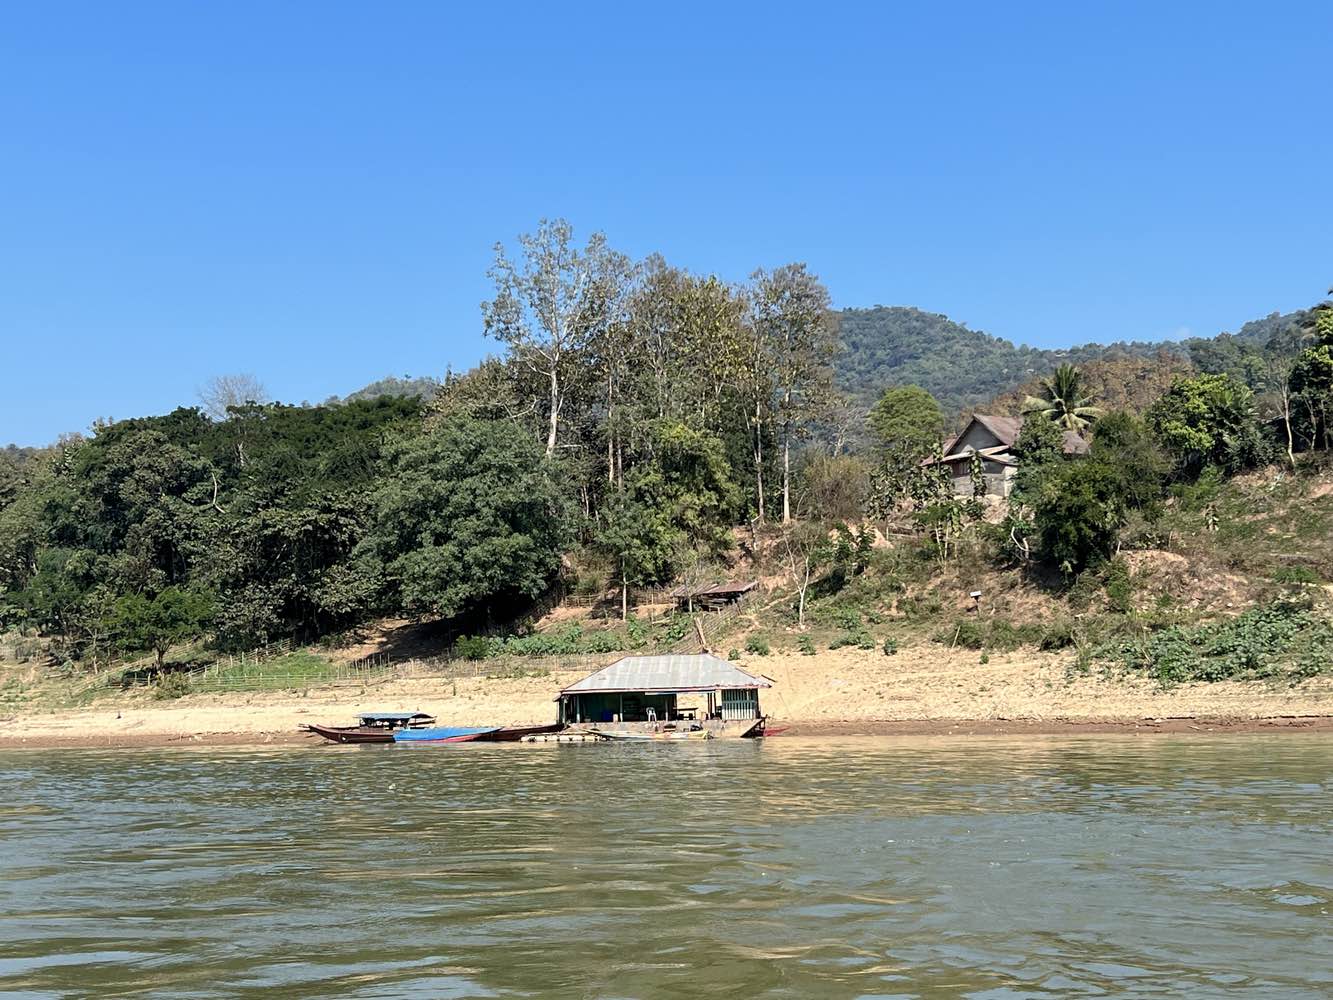 Laos Might Be Tourism’s Next Big Thing